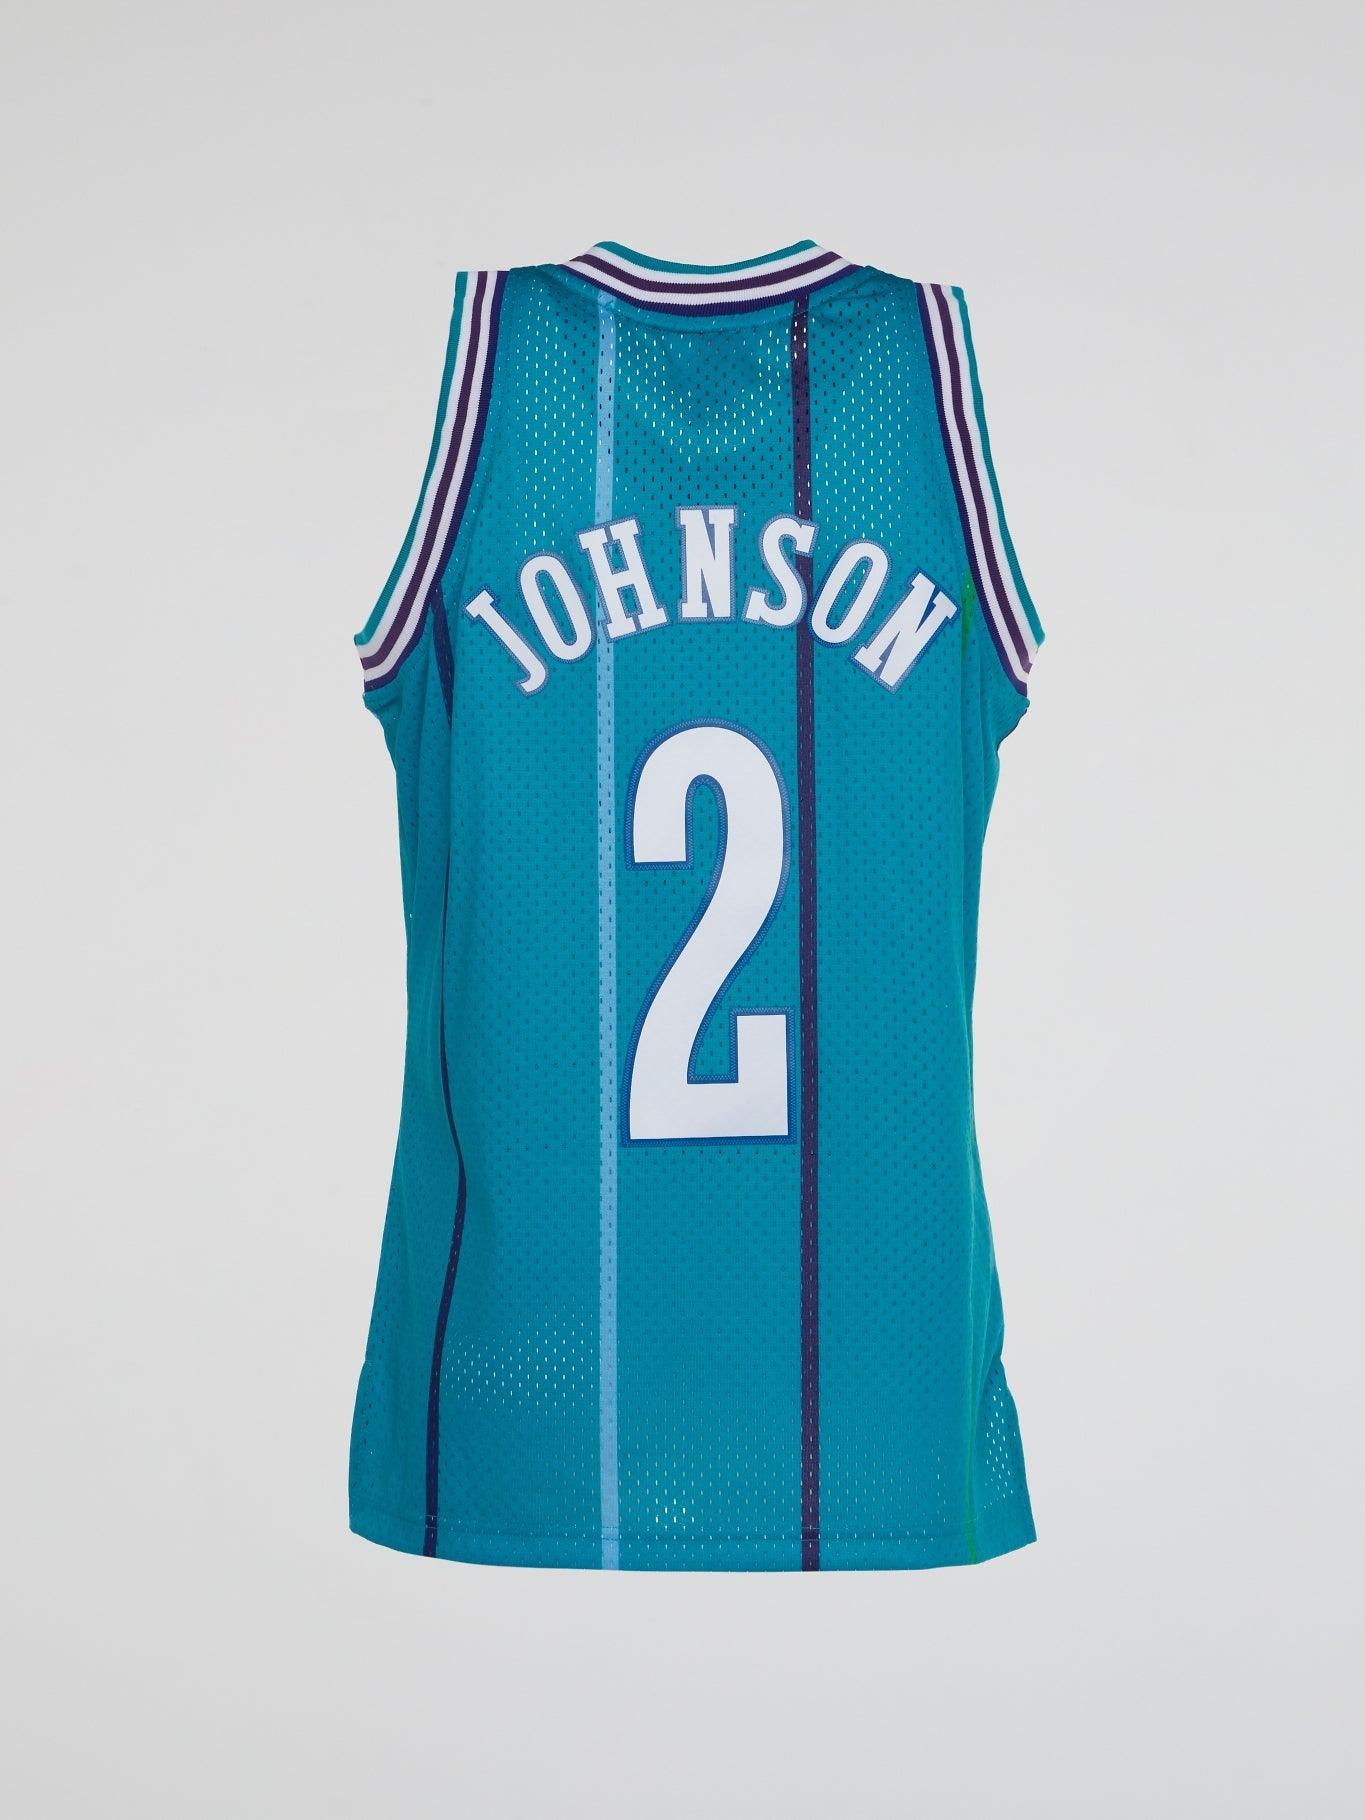 NBA Swingman Road Jersey Hornets 92 Larry Johnson - Teal - B-Hype Society